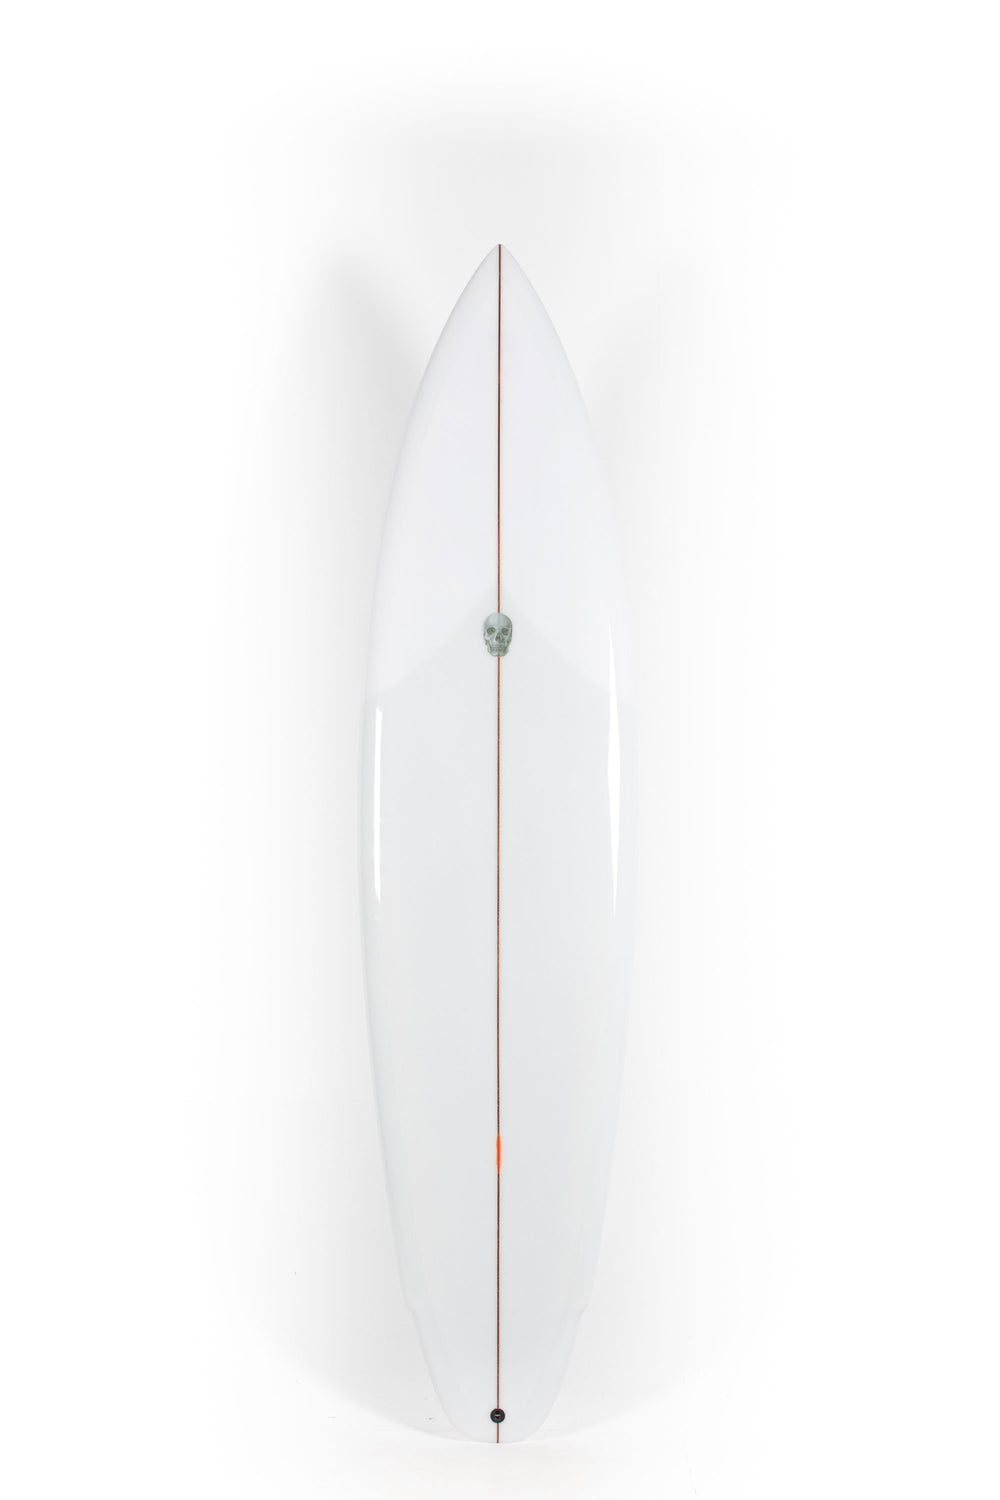 Pukas Surf Shop - Christenson Surfboards - LANE SPLITTER MID- 7'6